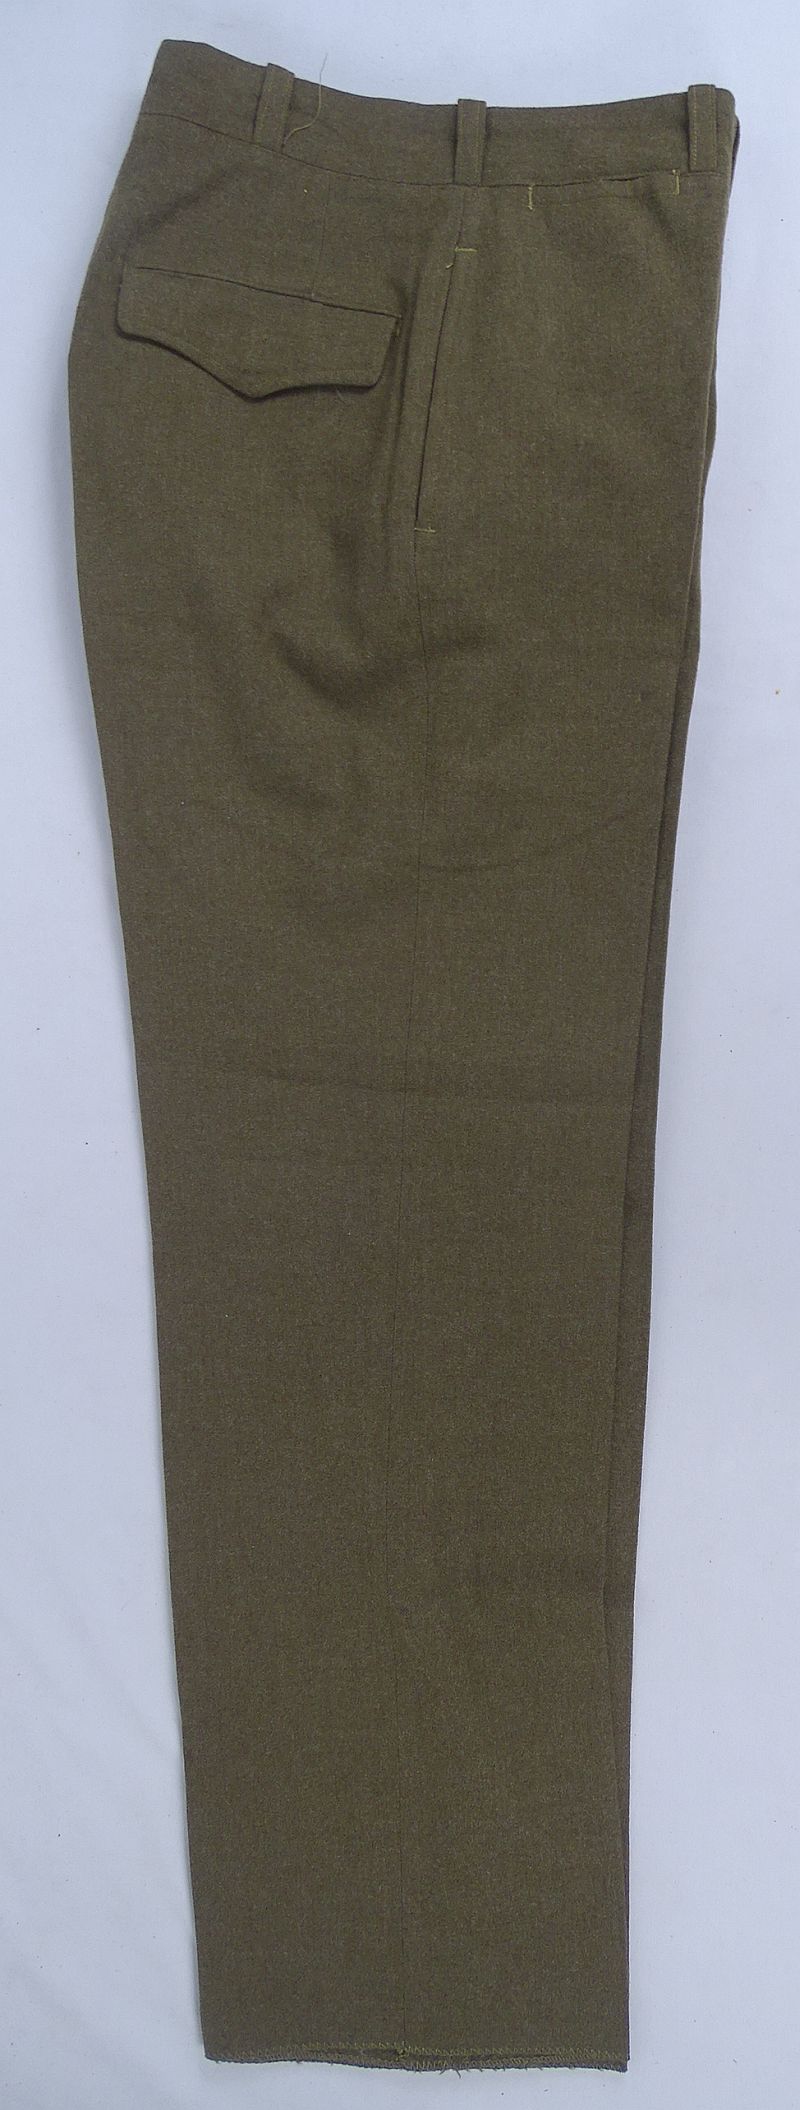 Sord Field Uniform Pants 42x36 Coyote | eBay